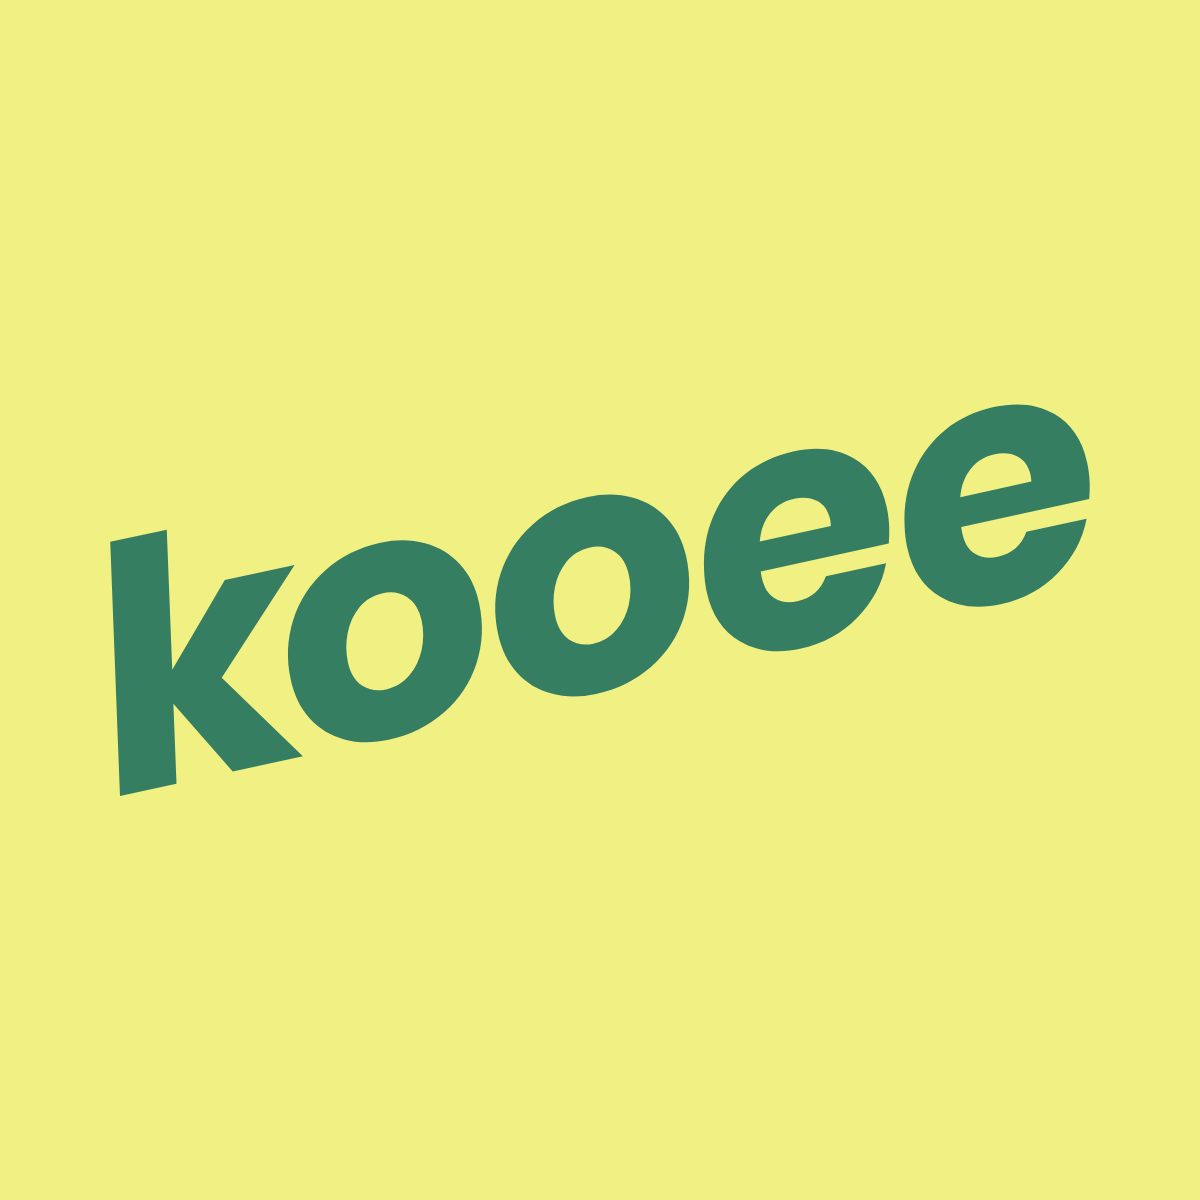 Kooee Reviews: Product Reviews